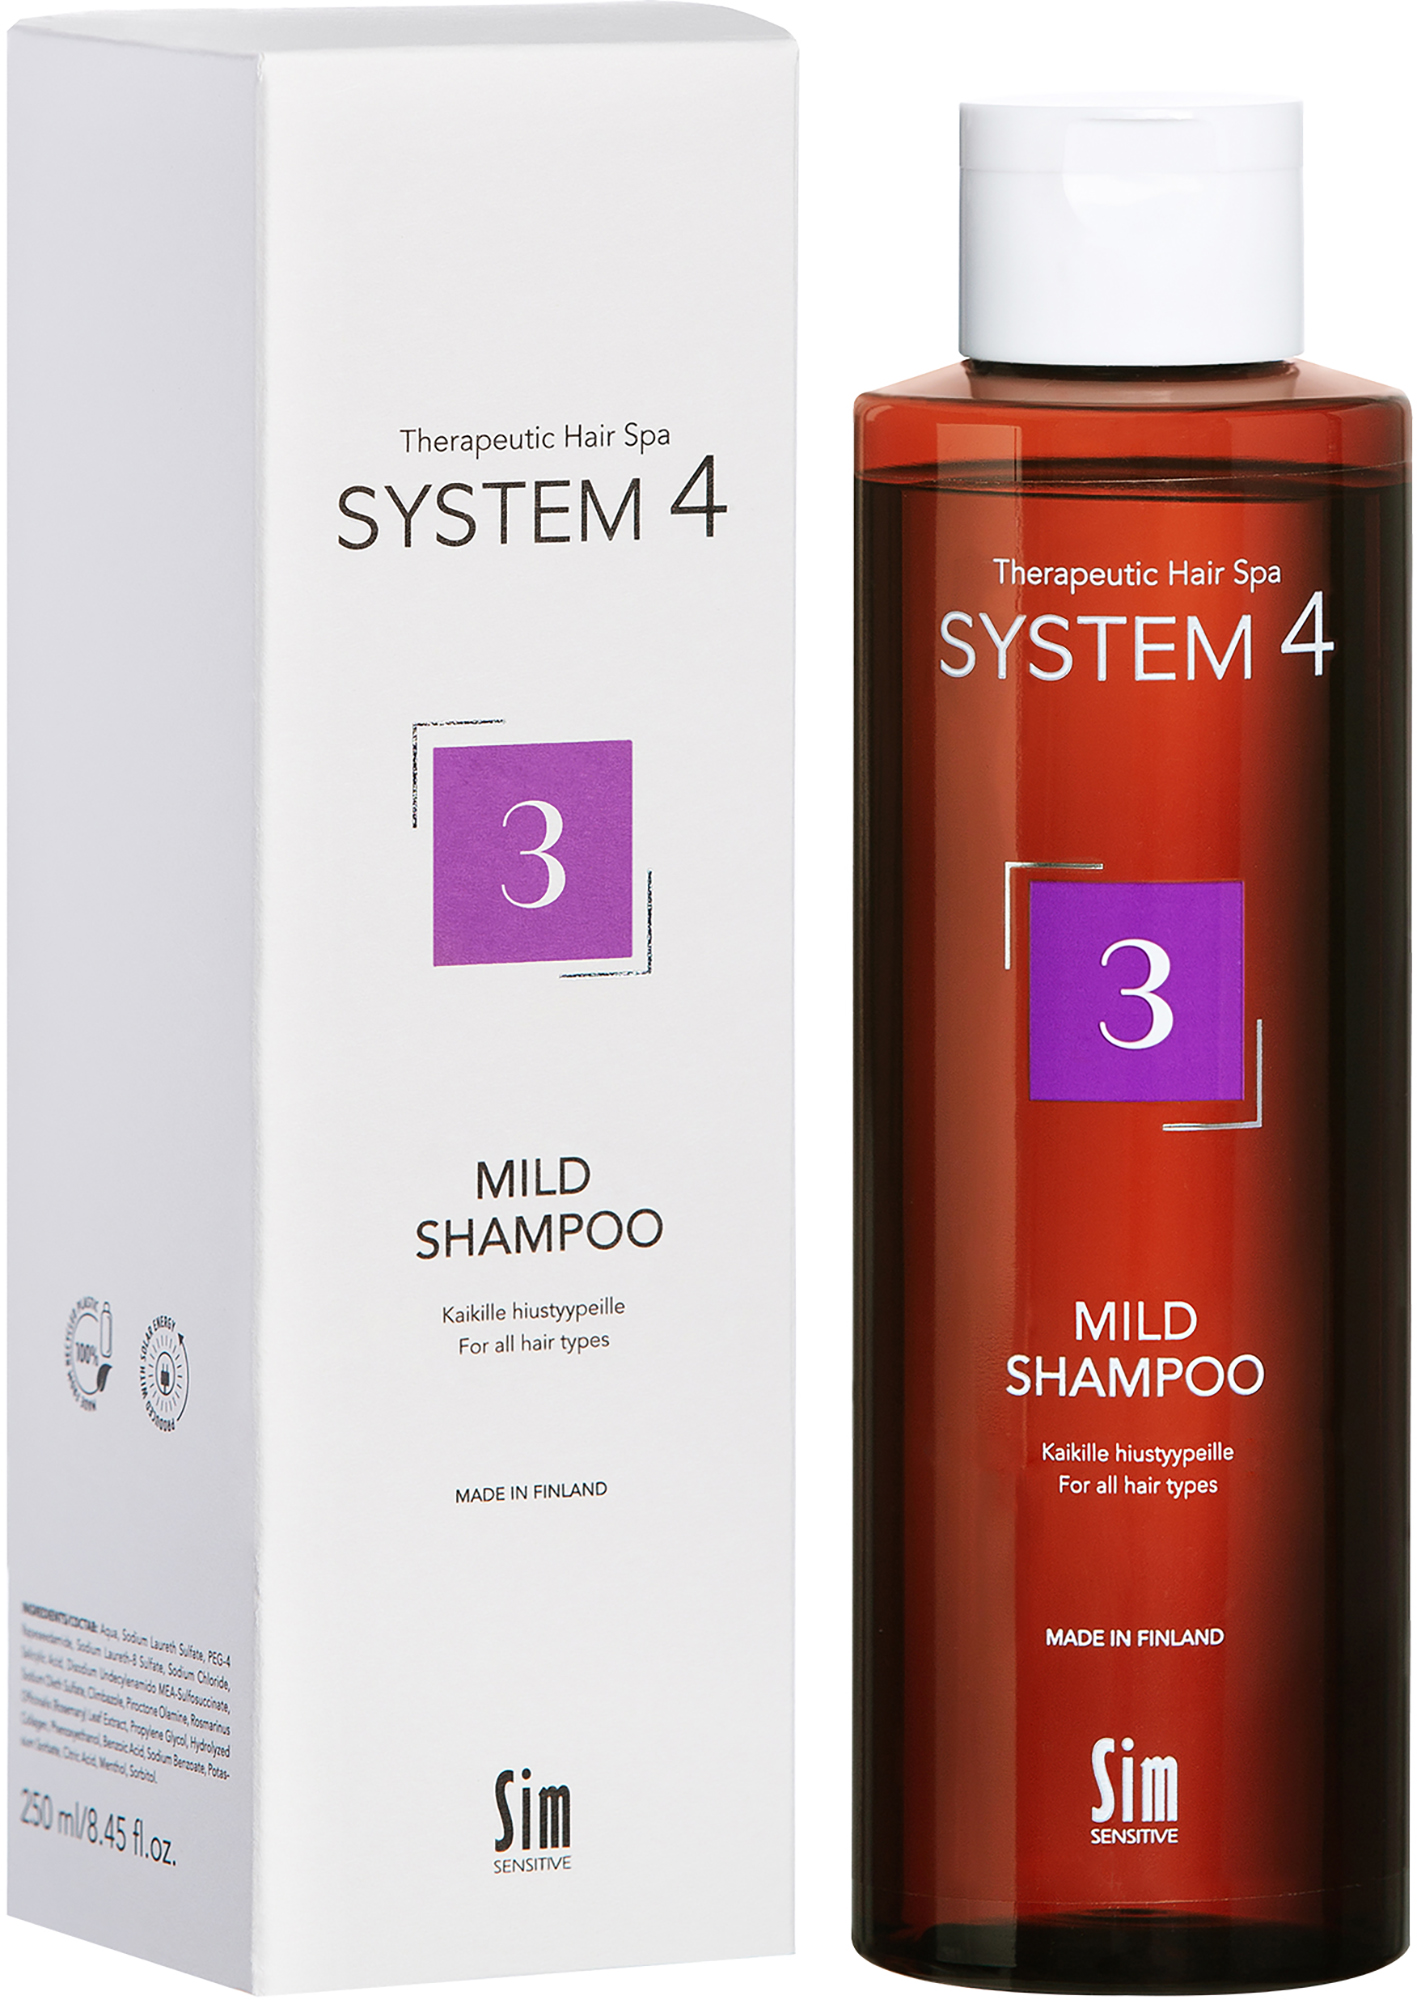 Sim Sensitive System 3 Mild Shampoo 250 ml